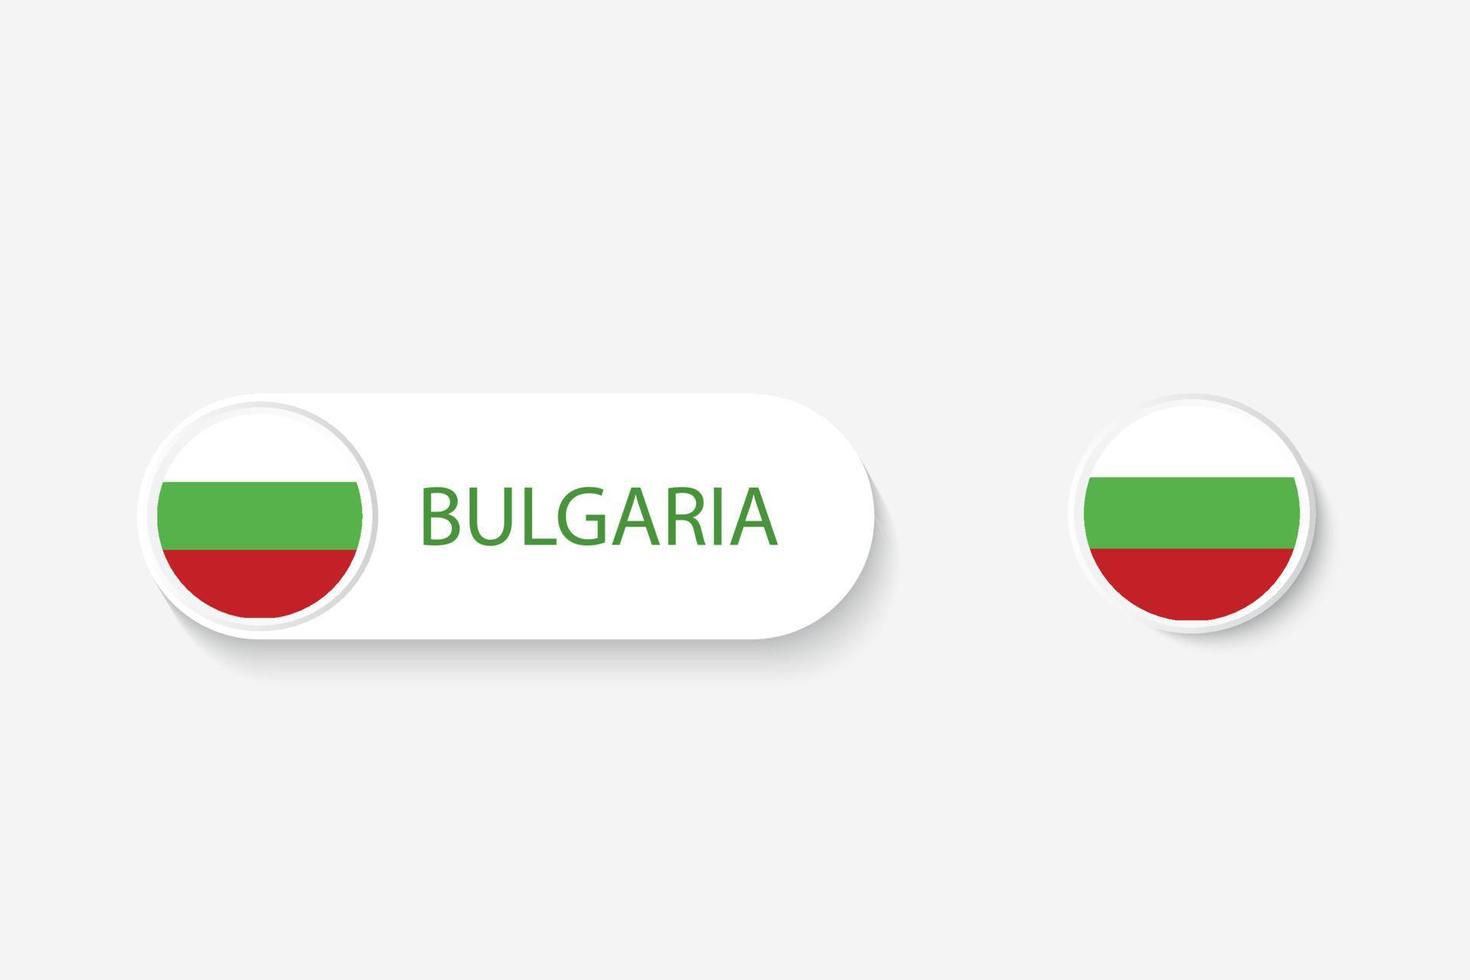 Bulgarien knappen flagga i illustration av oval formad med ordet av Bulgarien. och knappen flagga bulgarien. vektor